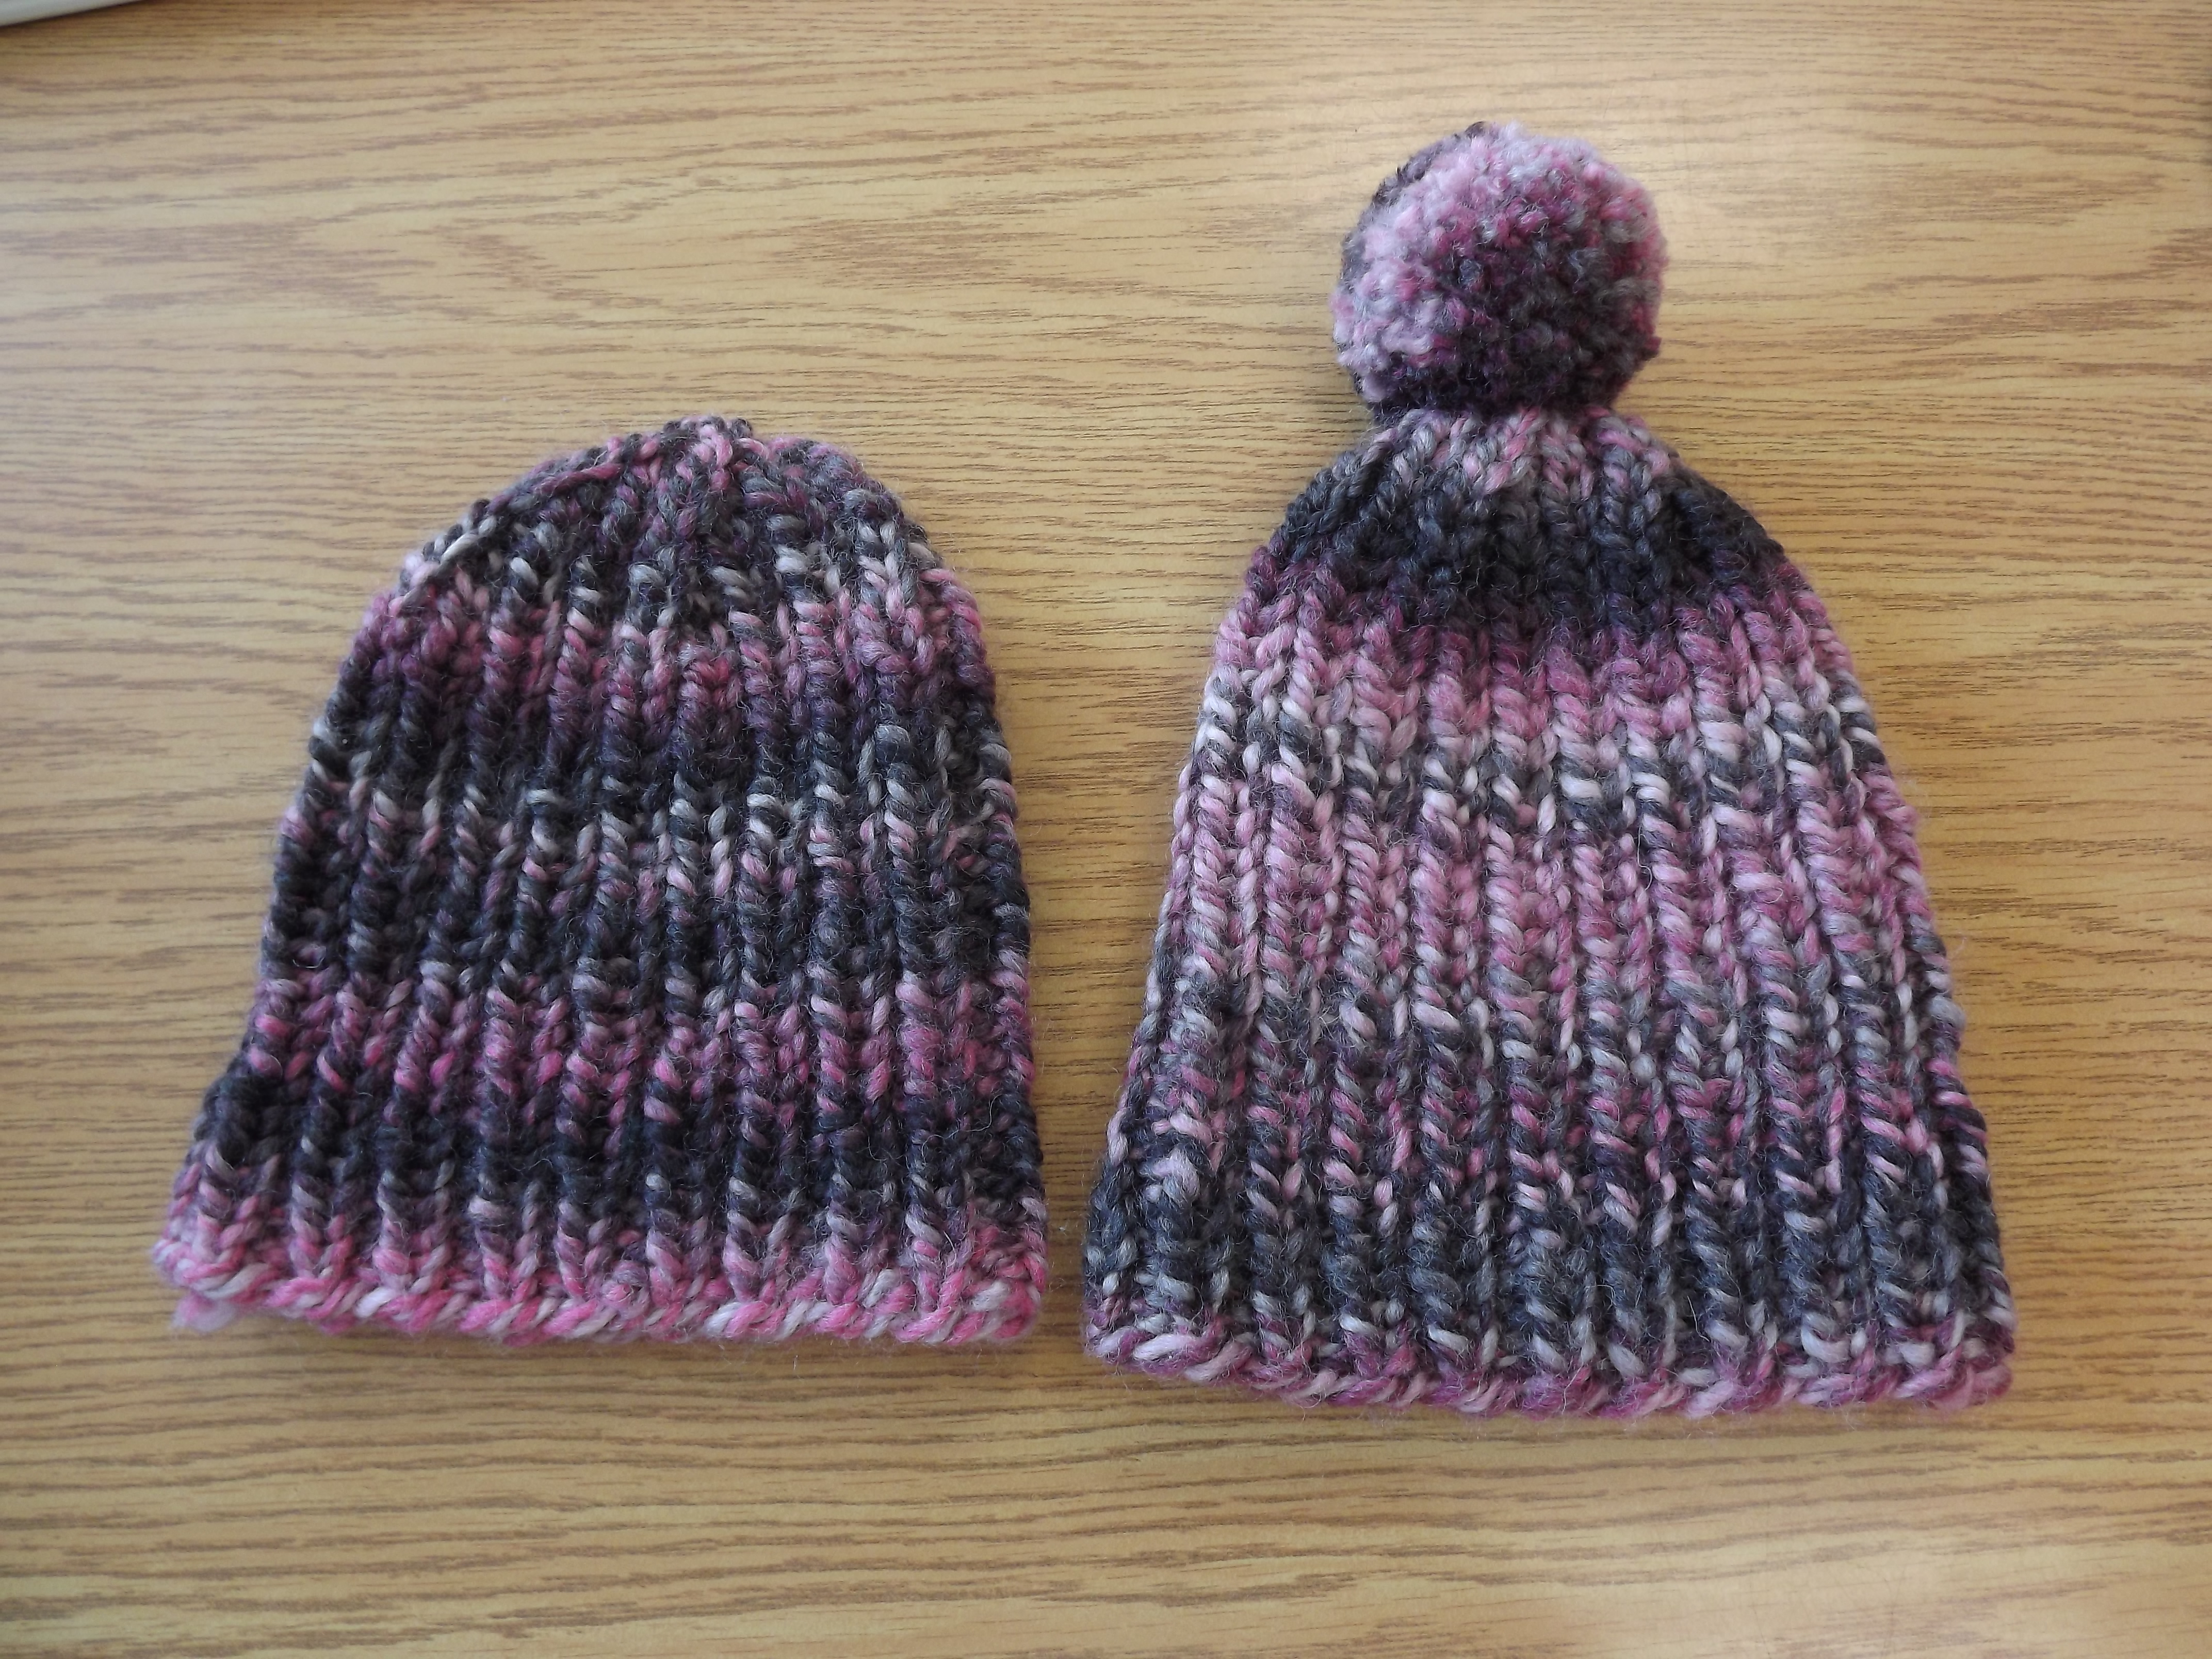 Bulky yarn free knit hat patterns